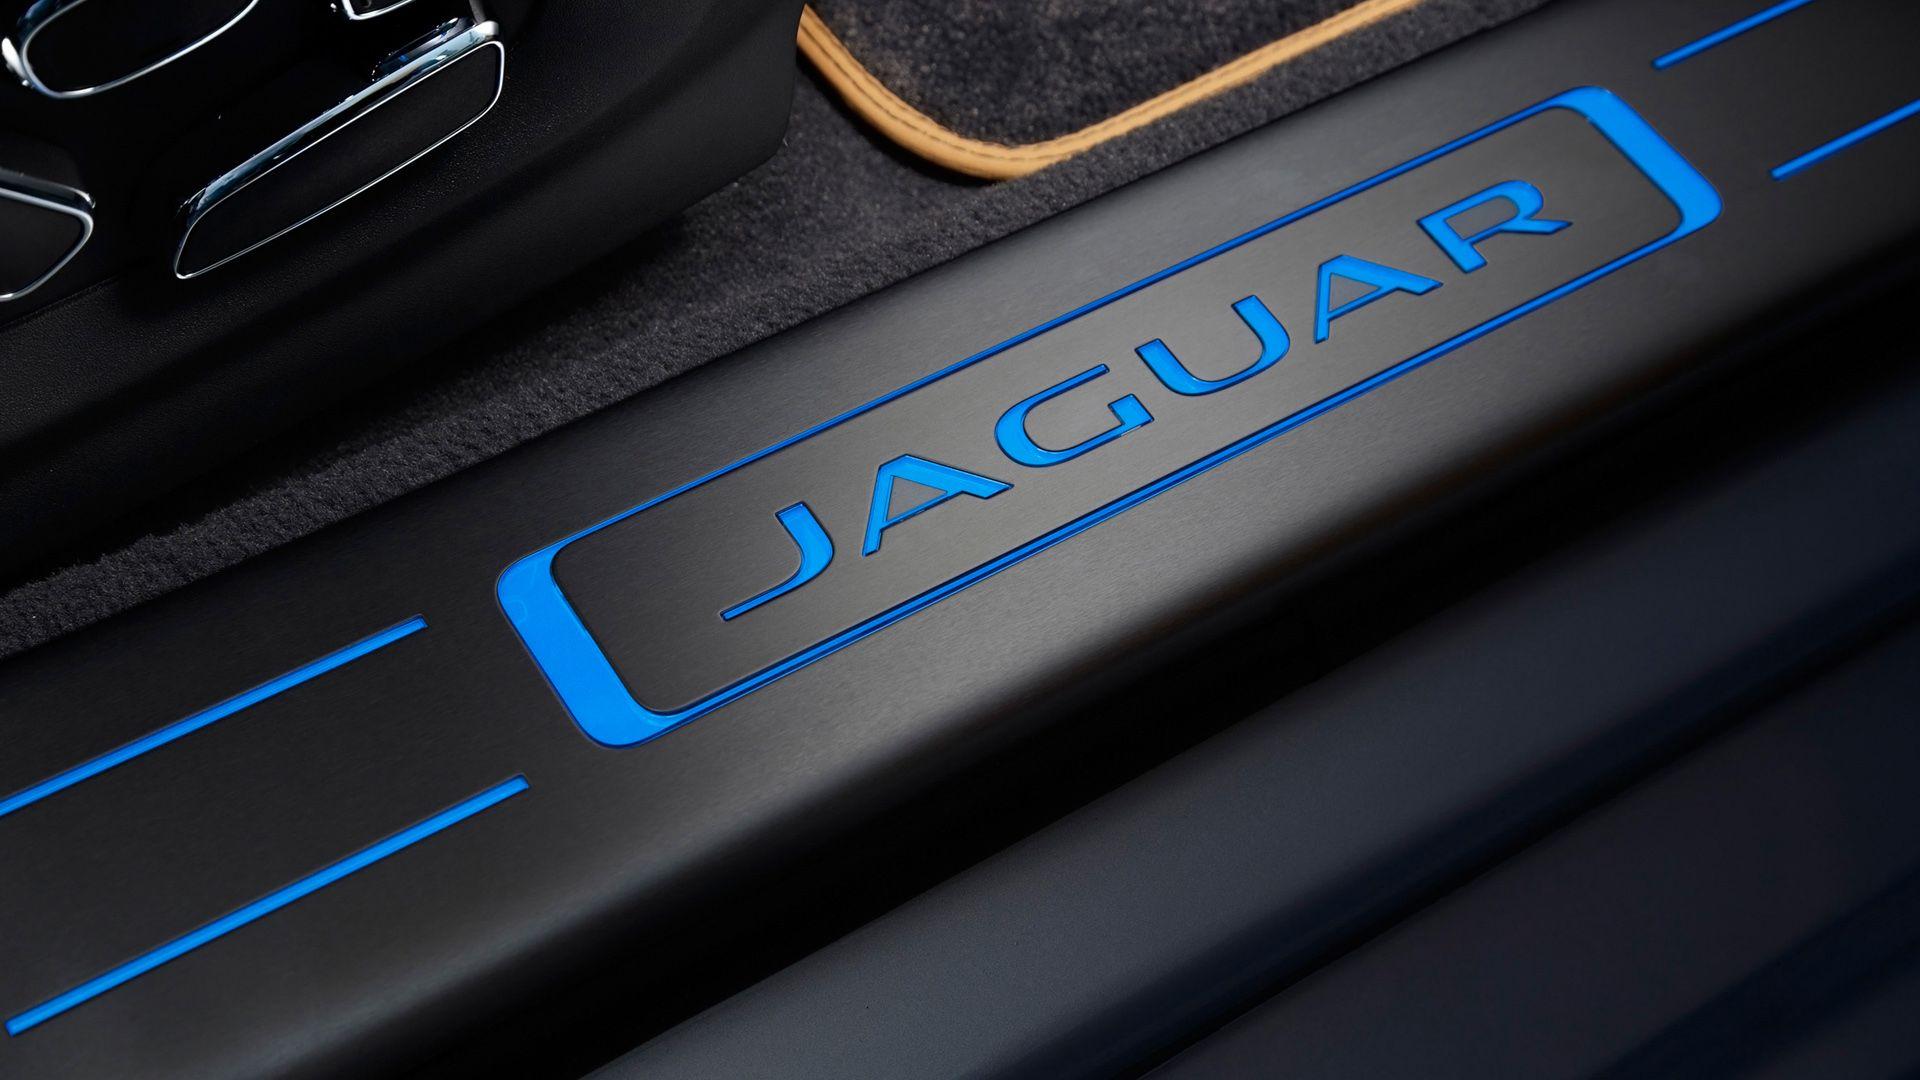 Jaguar Car Logo Wallpaper High Quality Automobile Wallpaper 1080p